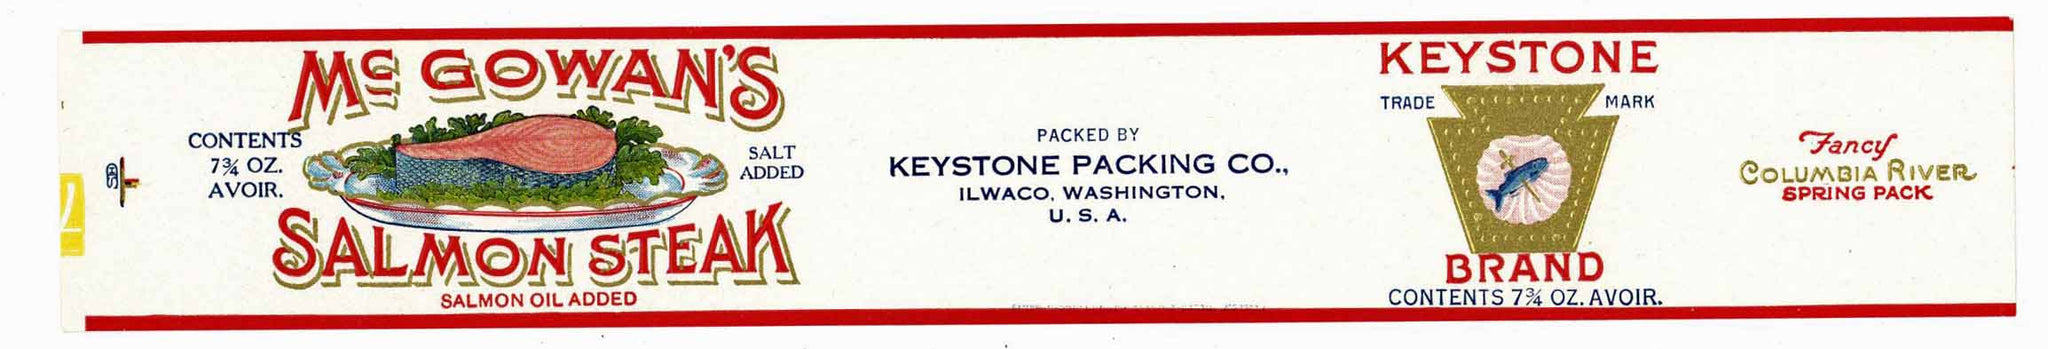 McGowan's Keystone Brand Vintage Ilwaco Washington Salmon Can Label